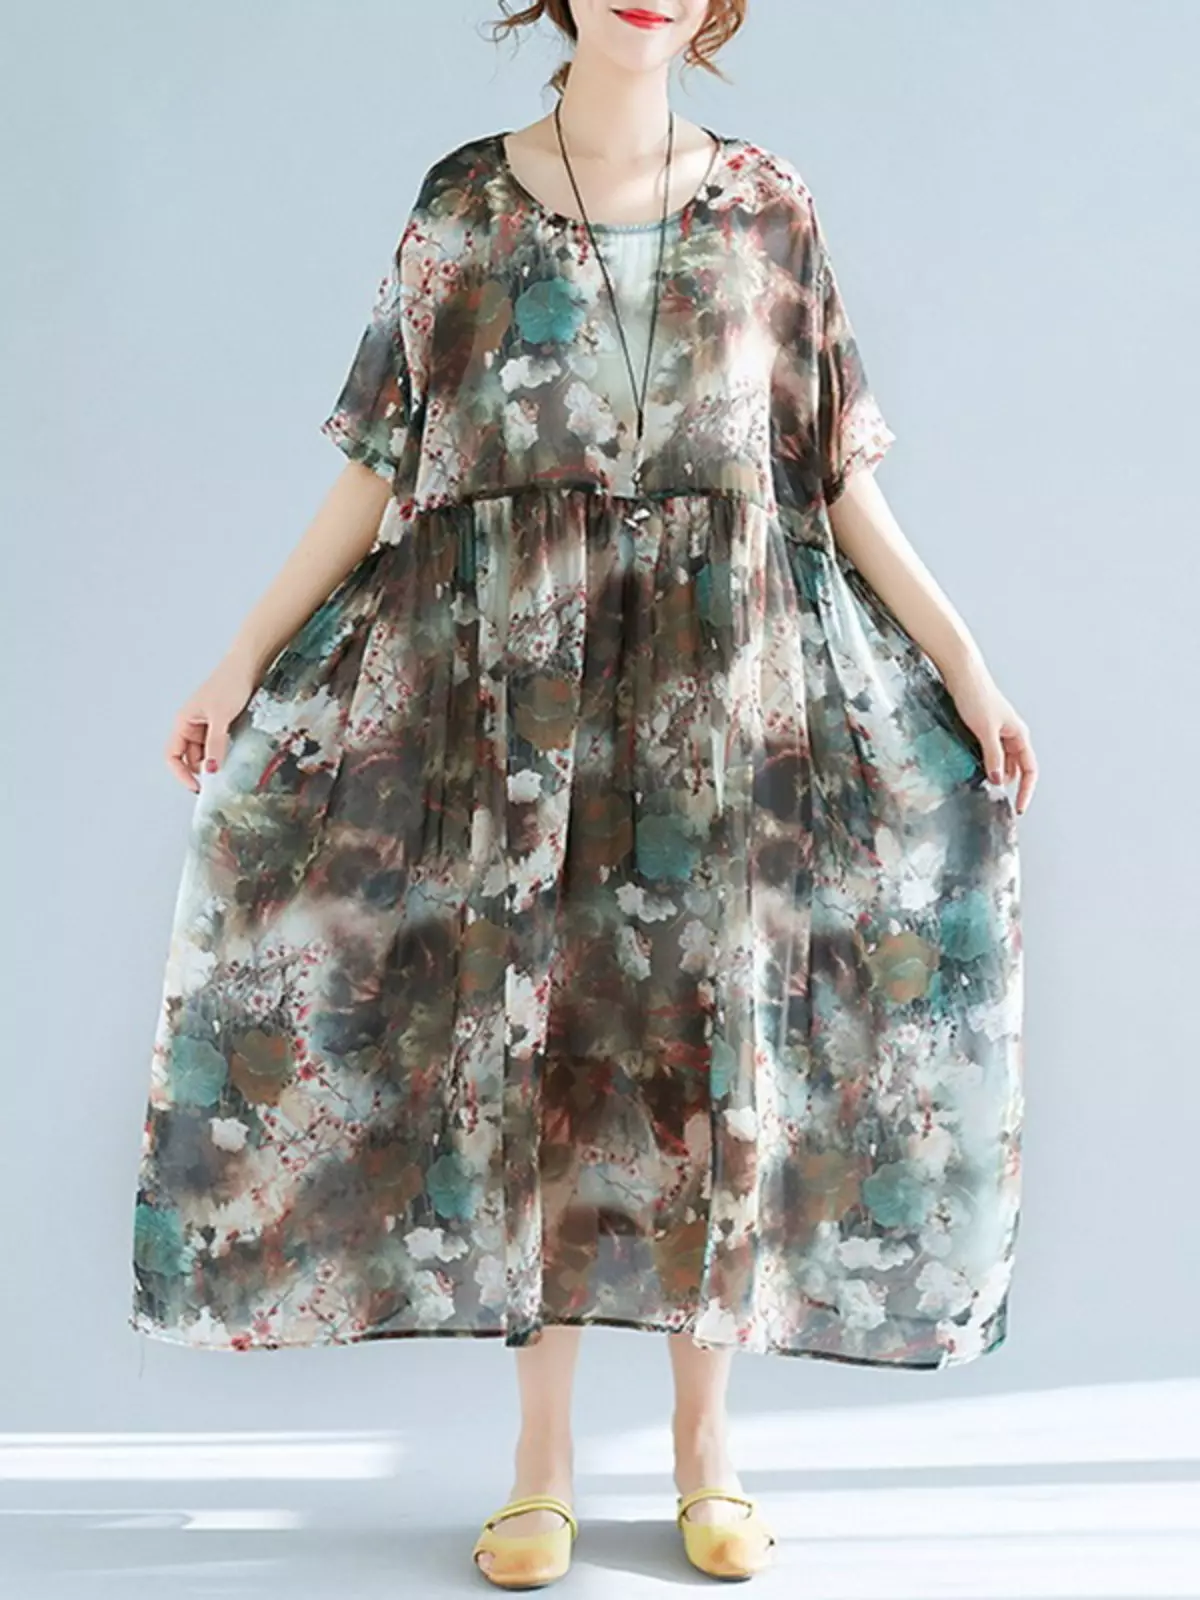 Bocho-στυλ φορέματα για πλήρη (99 φωτογραφίες): μοντέλα μεγάλου μεγέθους για γυναίκες, κομψές καλοκαιρινές και κομψές επιλογές διακοπών, άλλα στυλ φορέματα 815_35